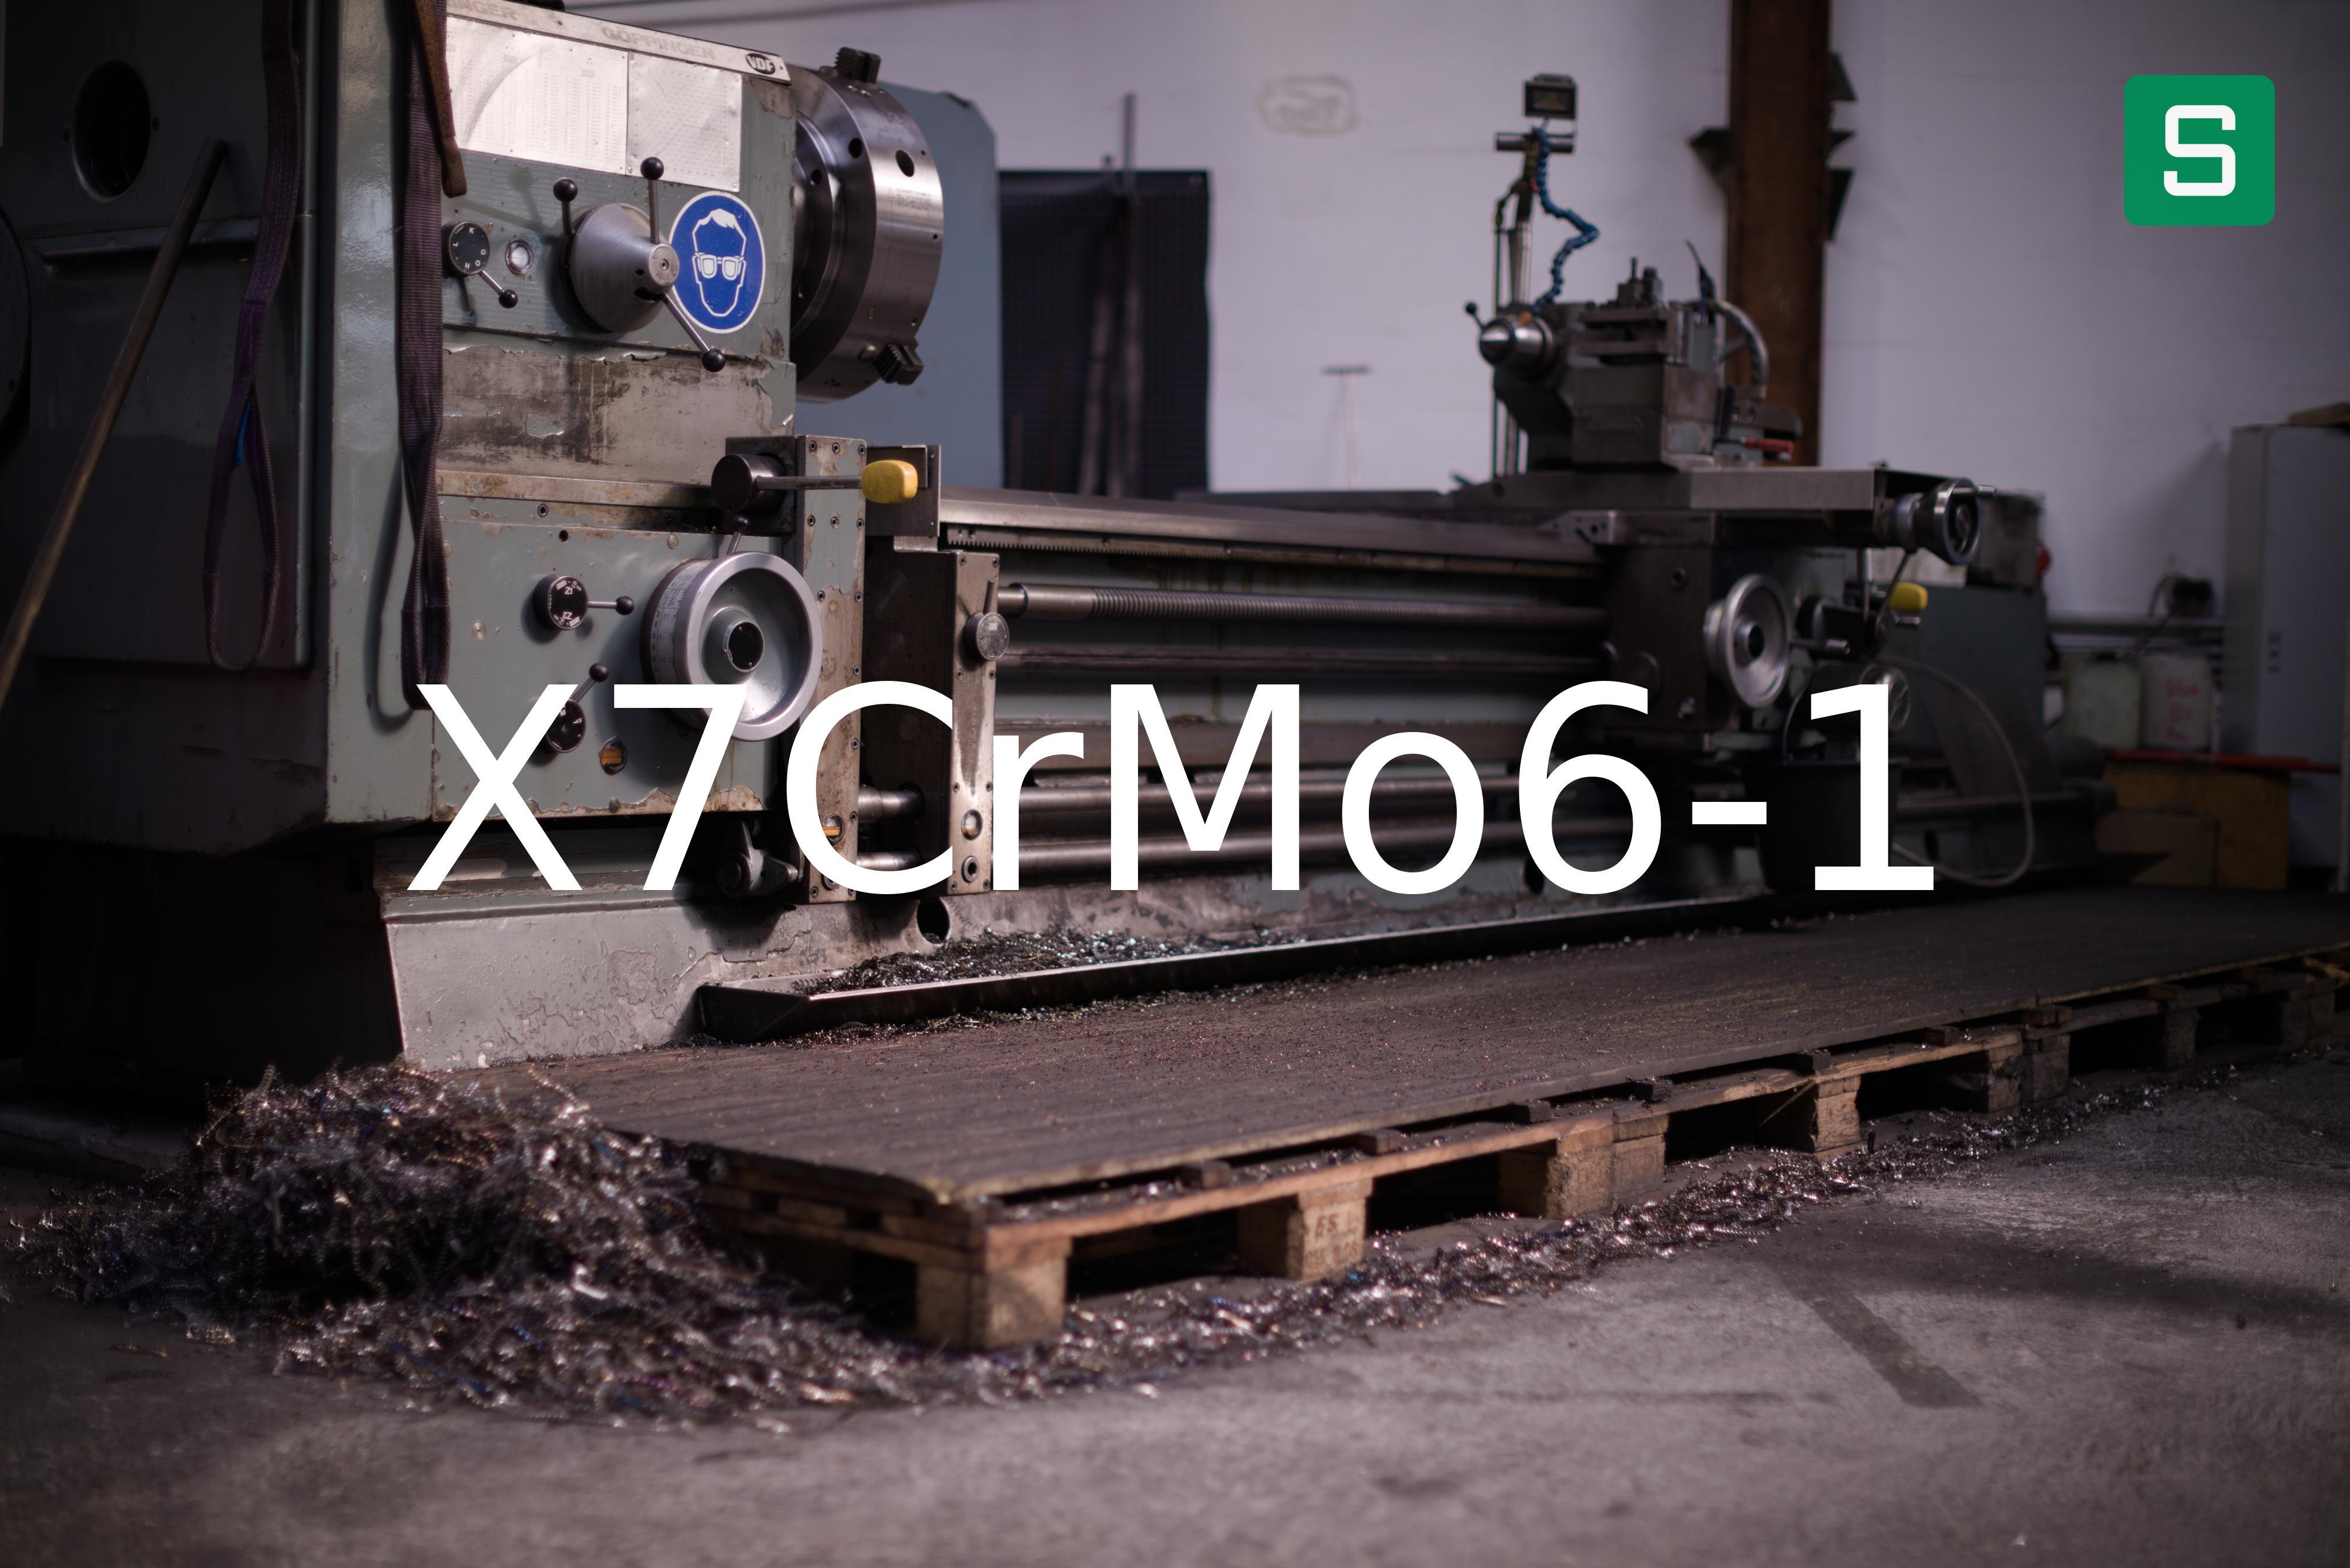 Steel Material: X7CrMo6-1